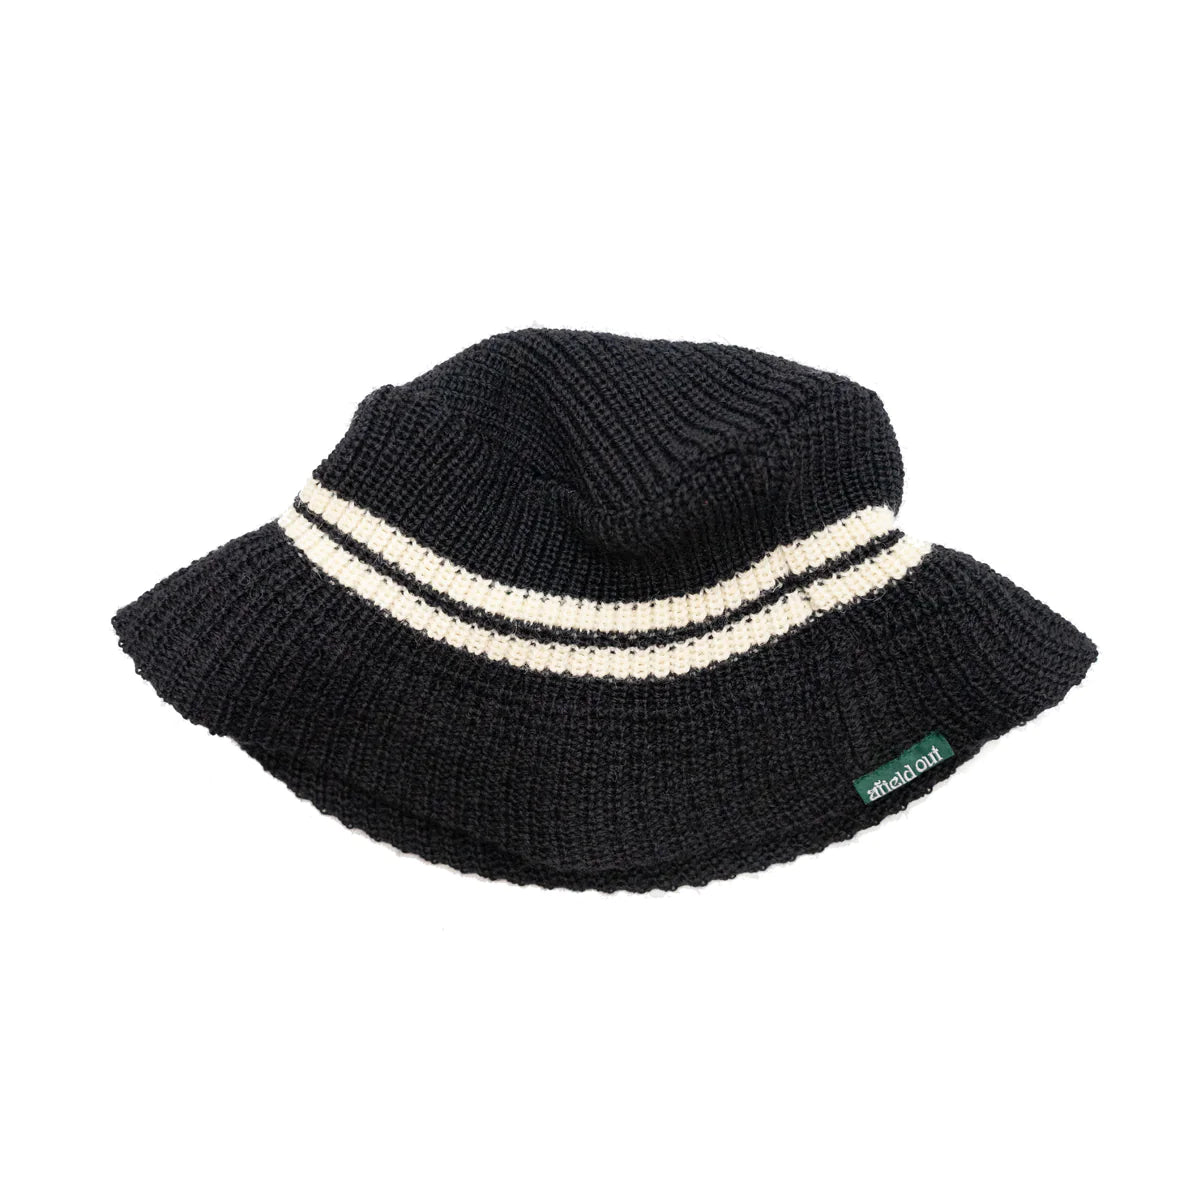 Afield Out Morro Knit Bucket Hat 'Black'